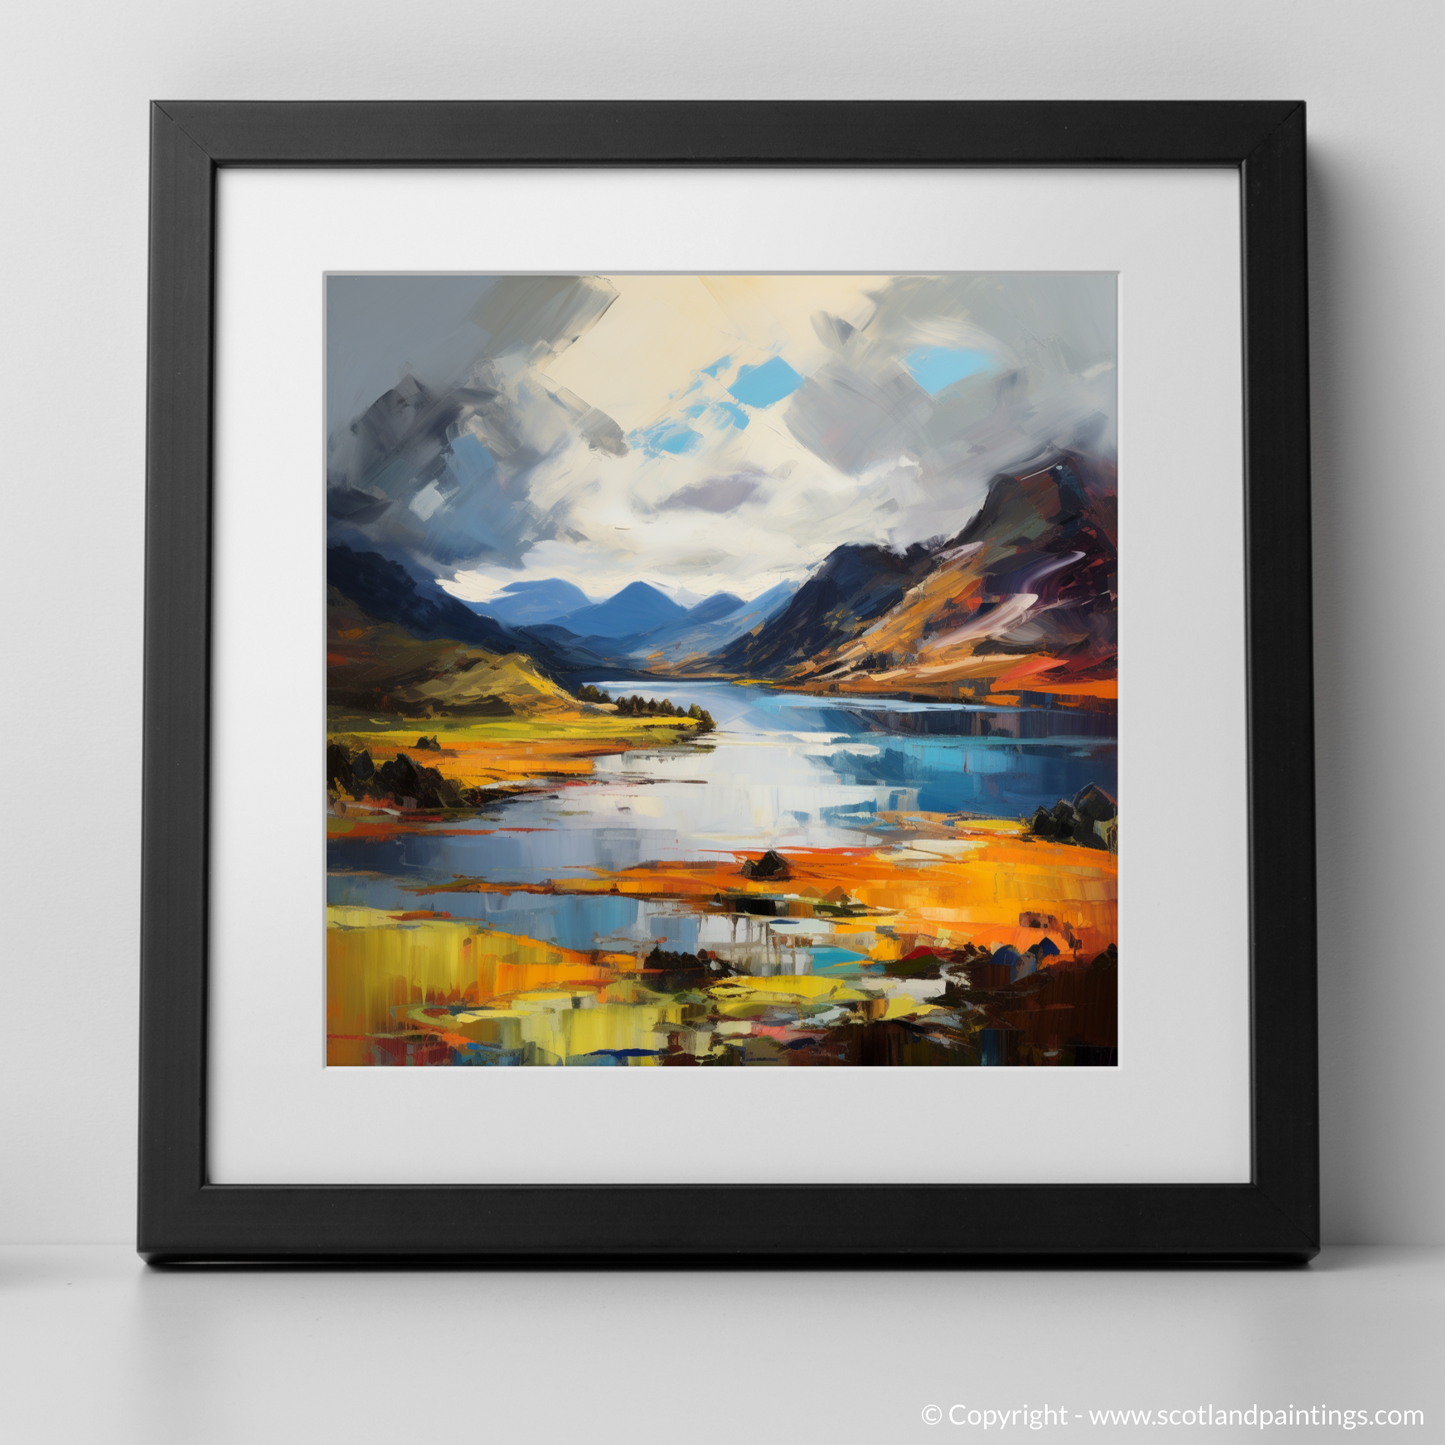 Art Print of Loch Shiel, Highlands with a black frame